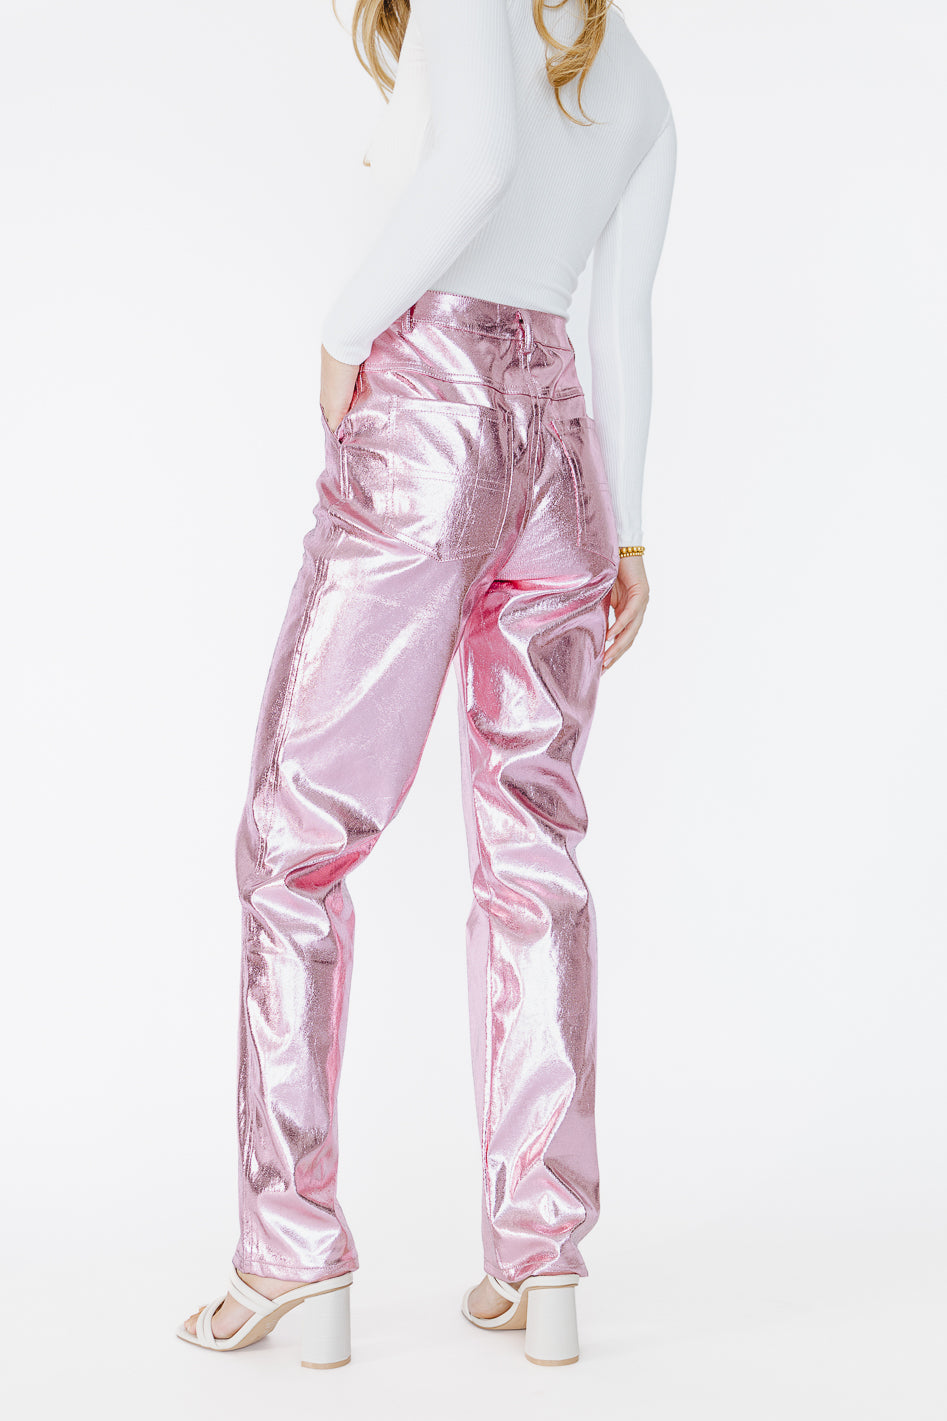 Khloé Kardashian wears hot pink metallic trousers on 'Hot Ones'